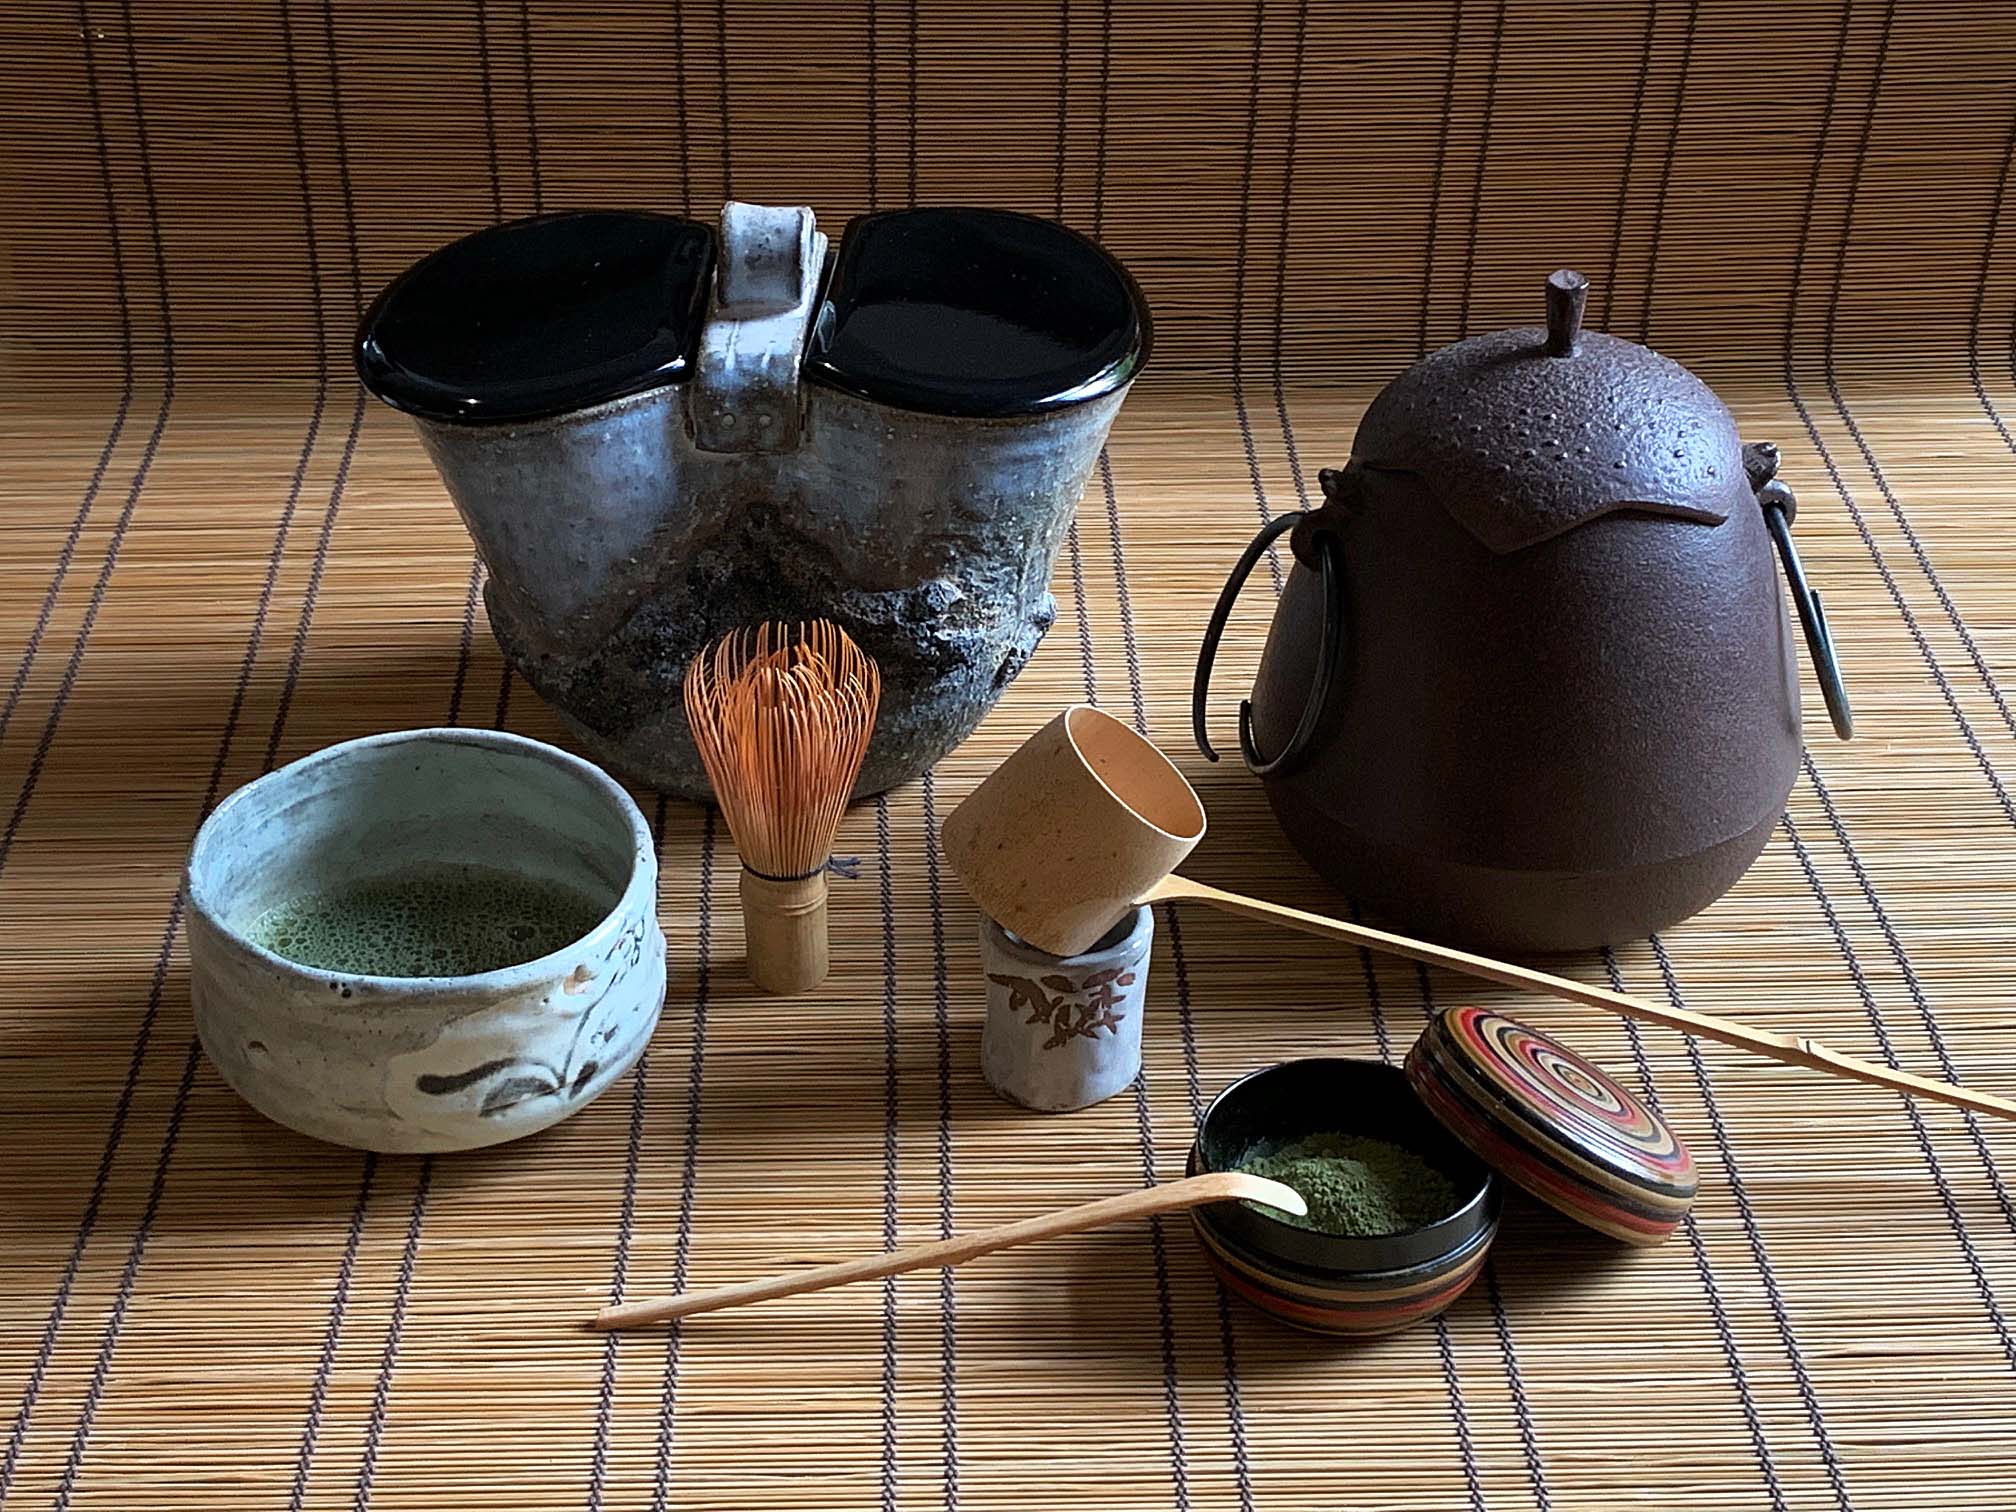 Japanese Tea Ceremony utensils